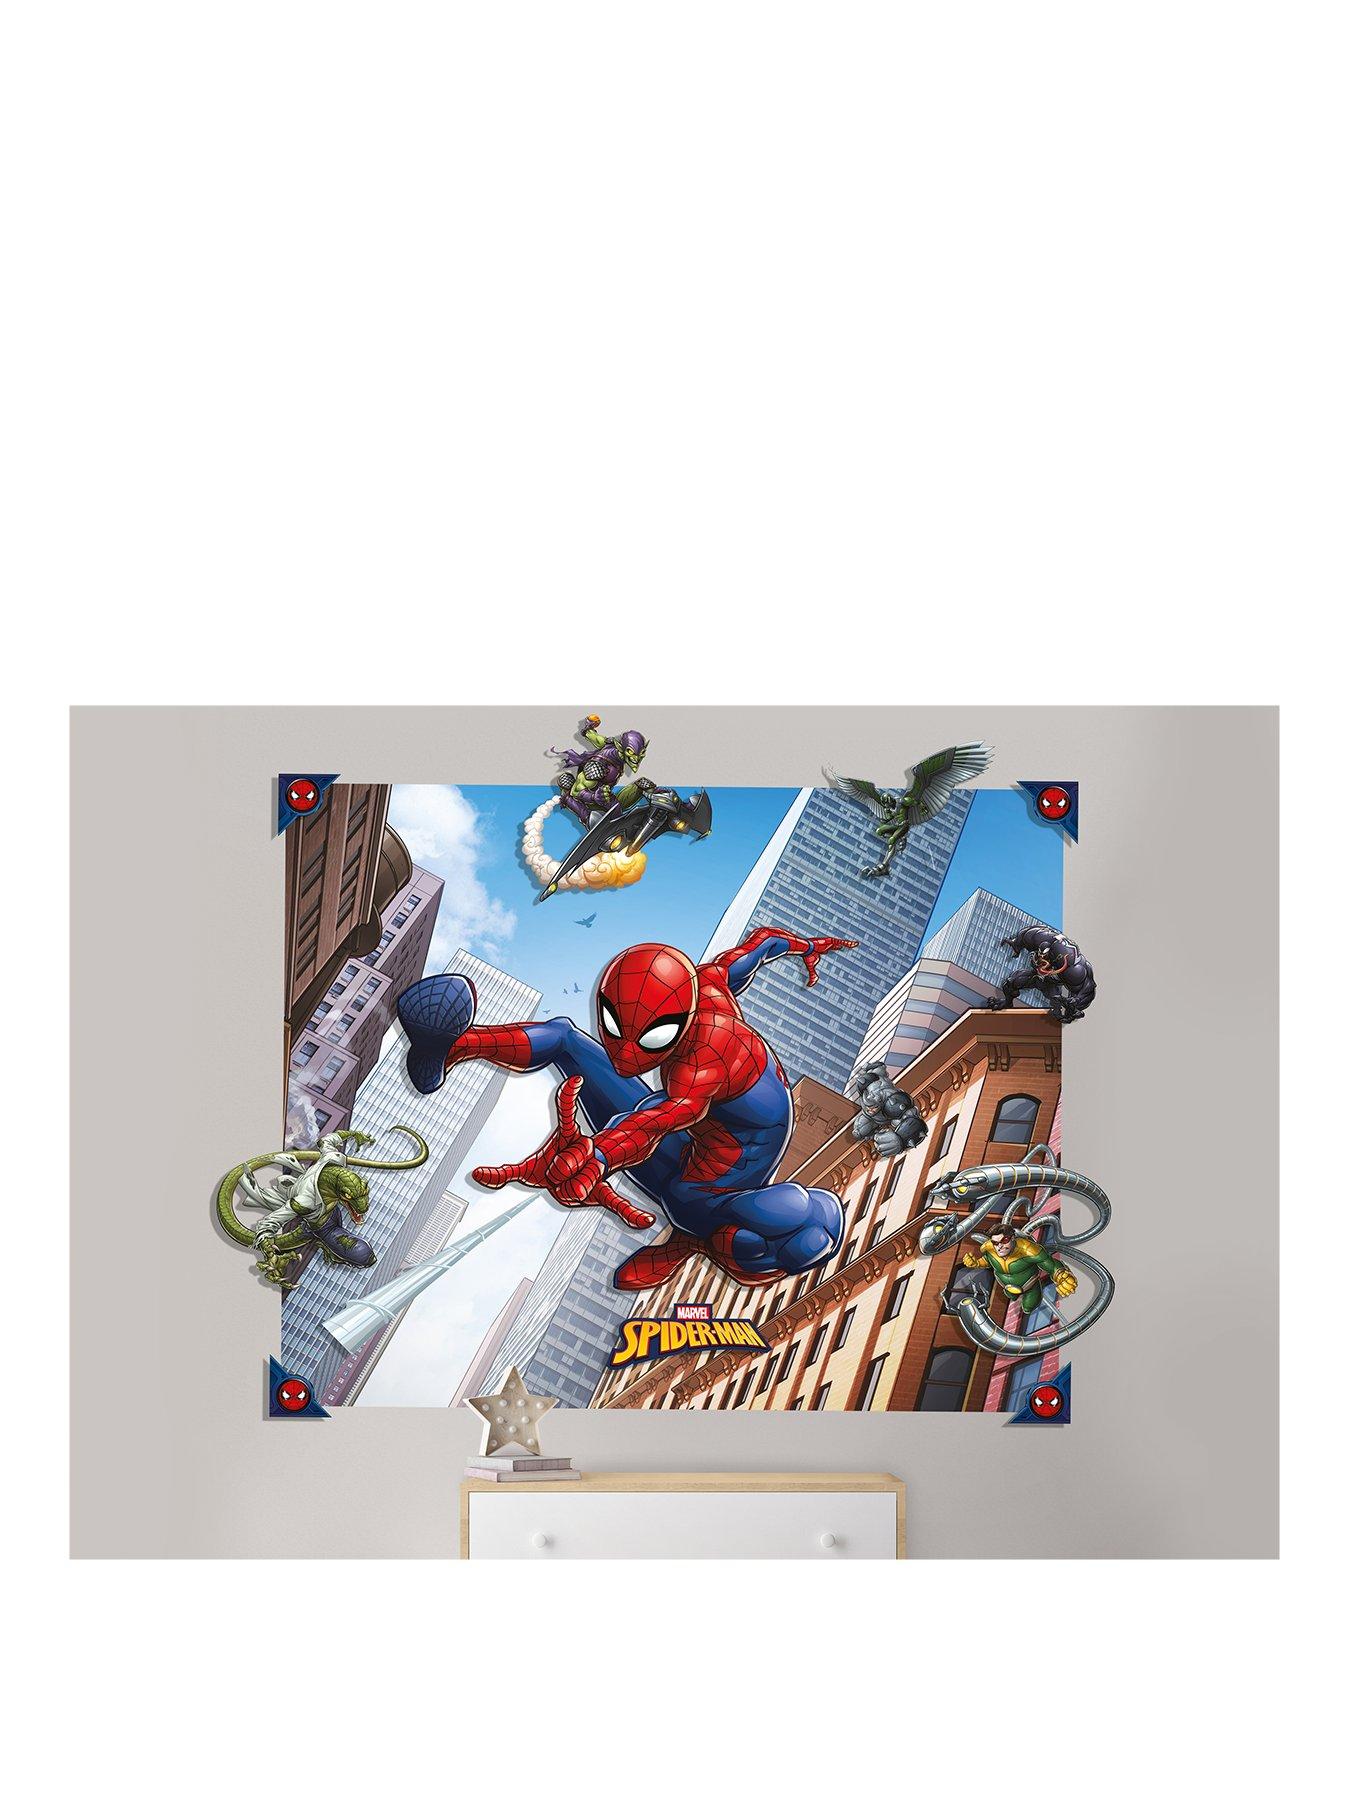 How To Find Spiderman Alternate Suit 8 Roblox Spider Man